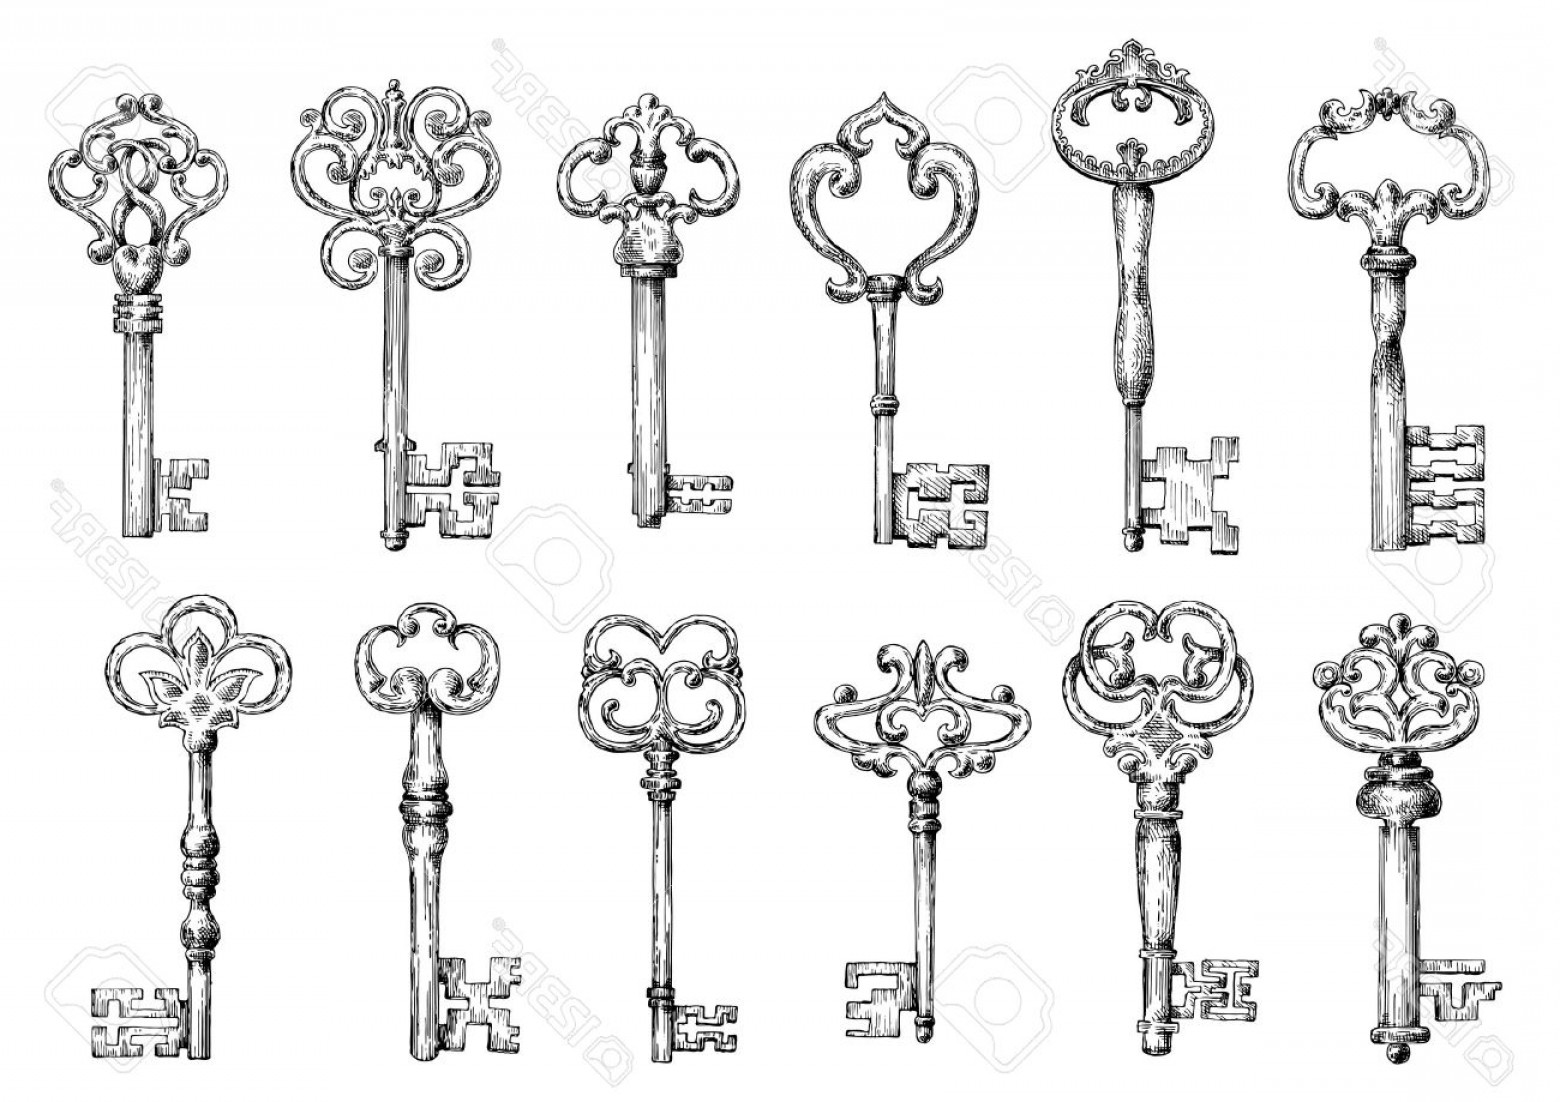 medieval clipart key